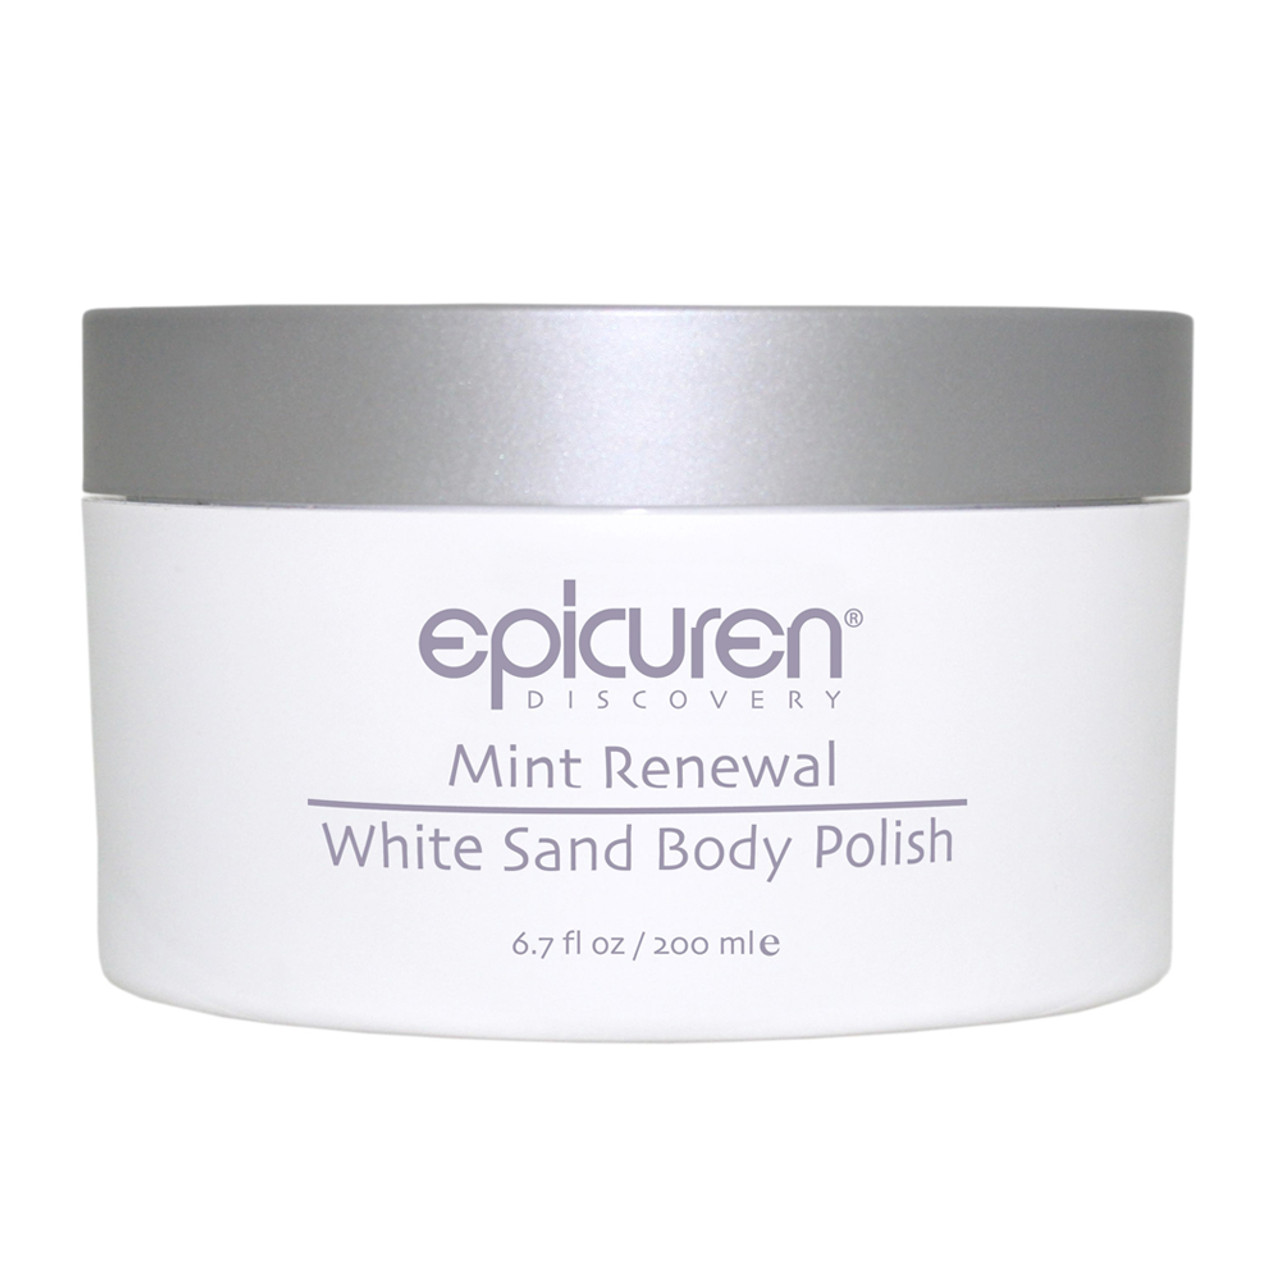 epicuren Discovery Mint Renewal White Sand Body Polish BeautifiedYou.com